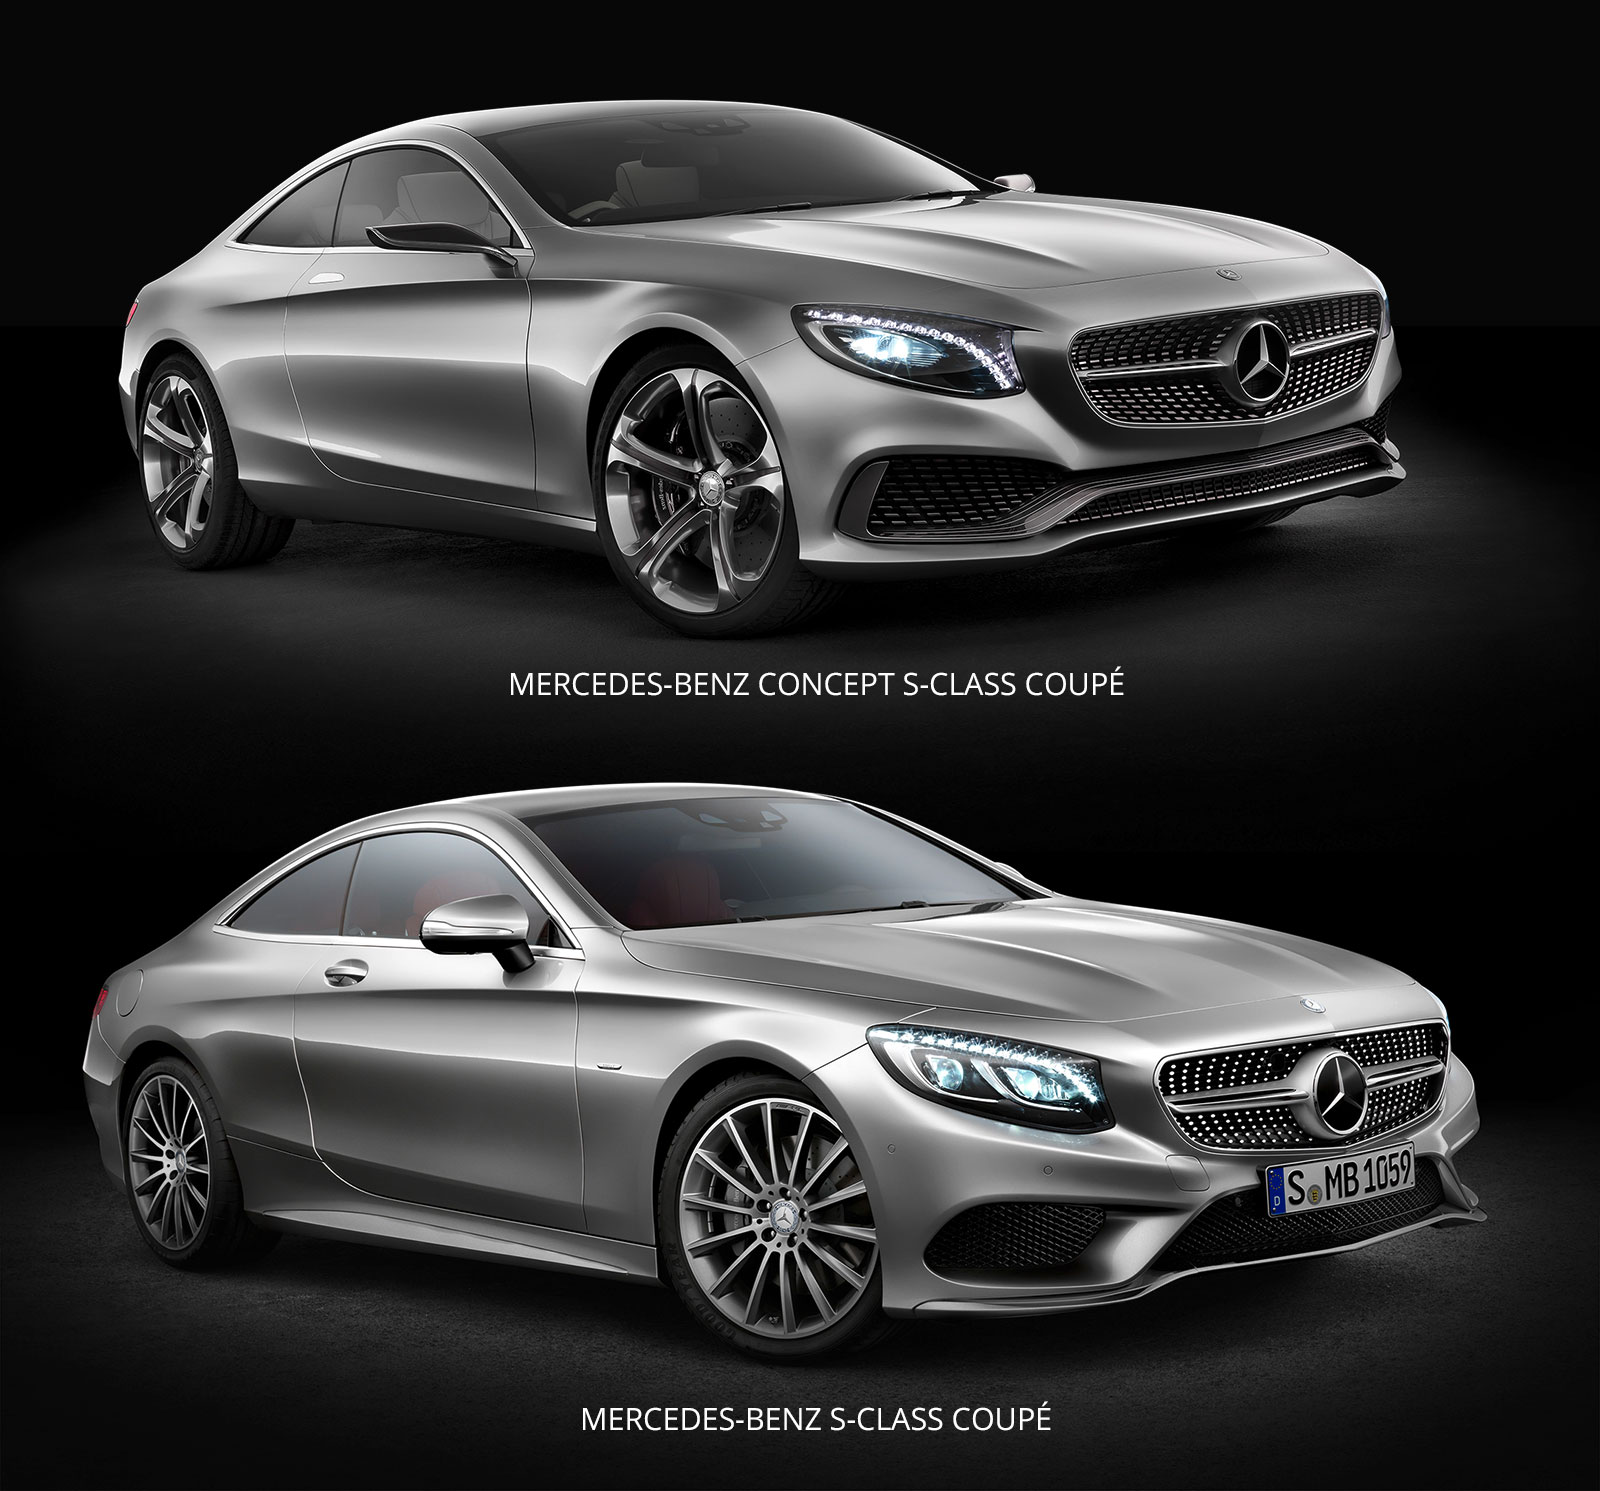 Mercedes-Benz-S-Class-Coupe-Concept-and-production-comparison-03.jpg